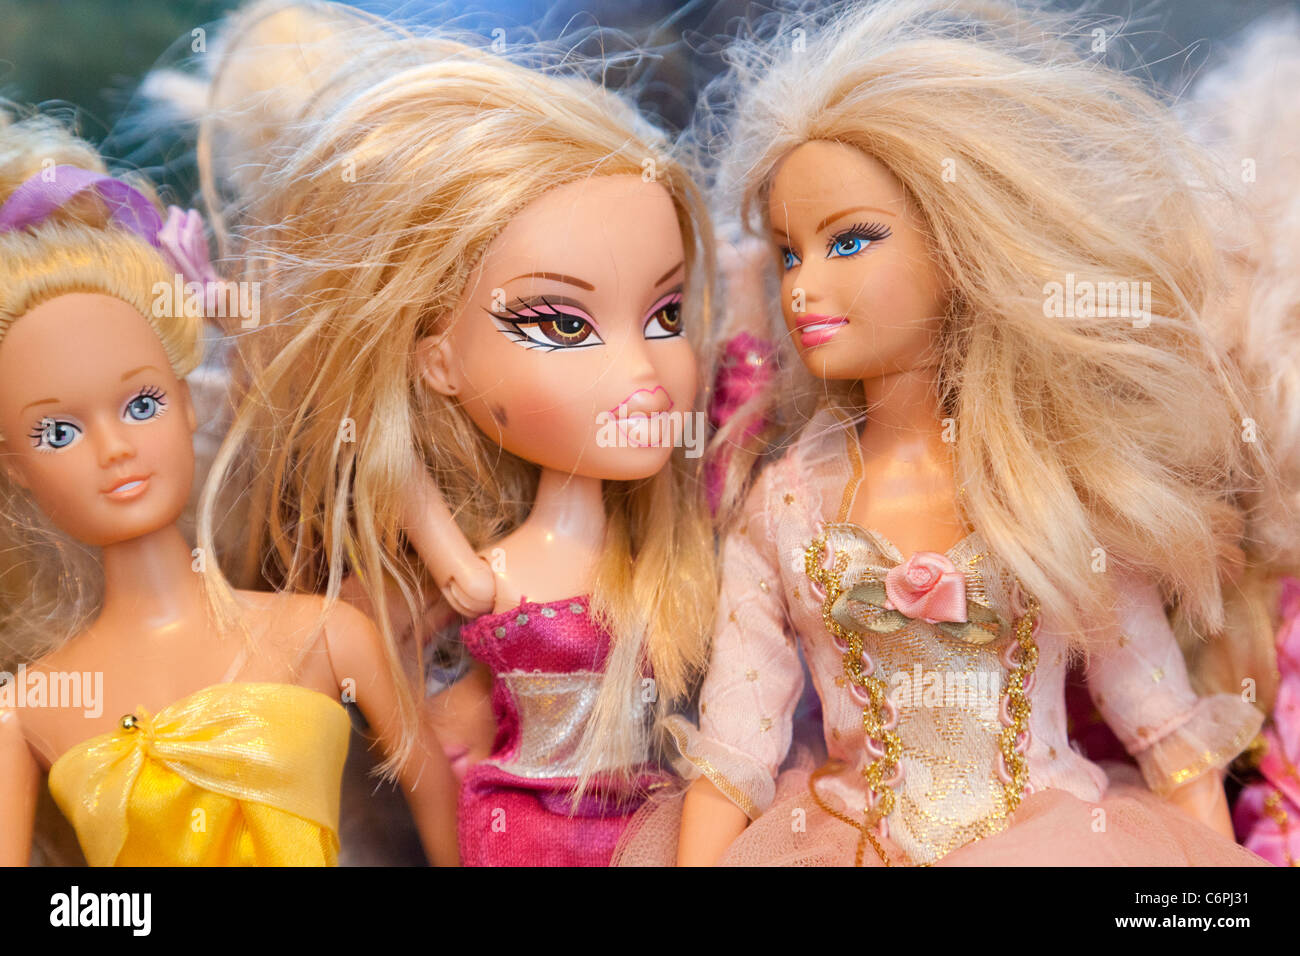 Barbie and Bratz dolls together Stock Photo